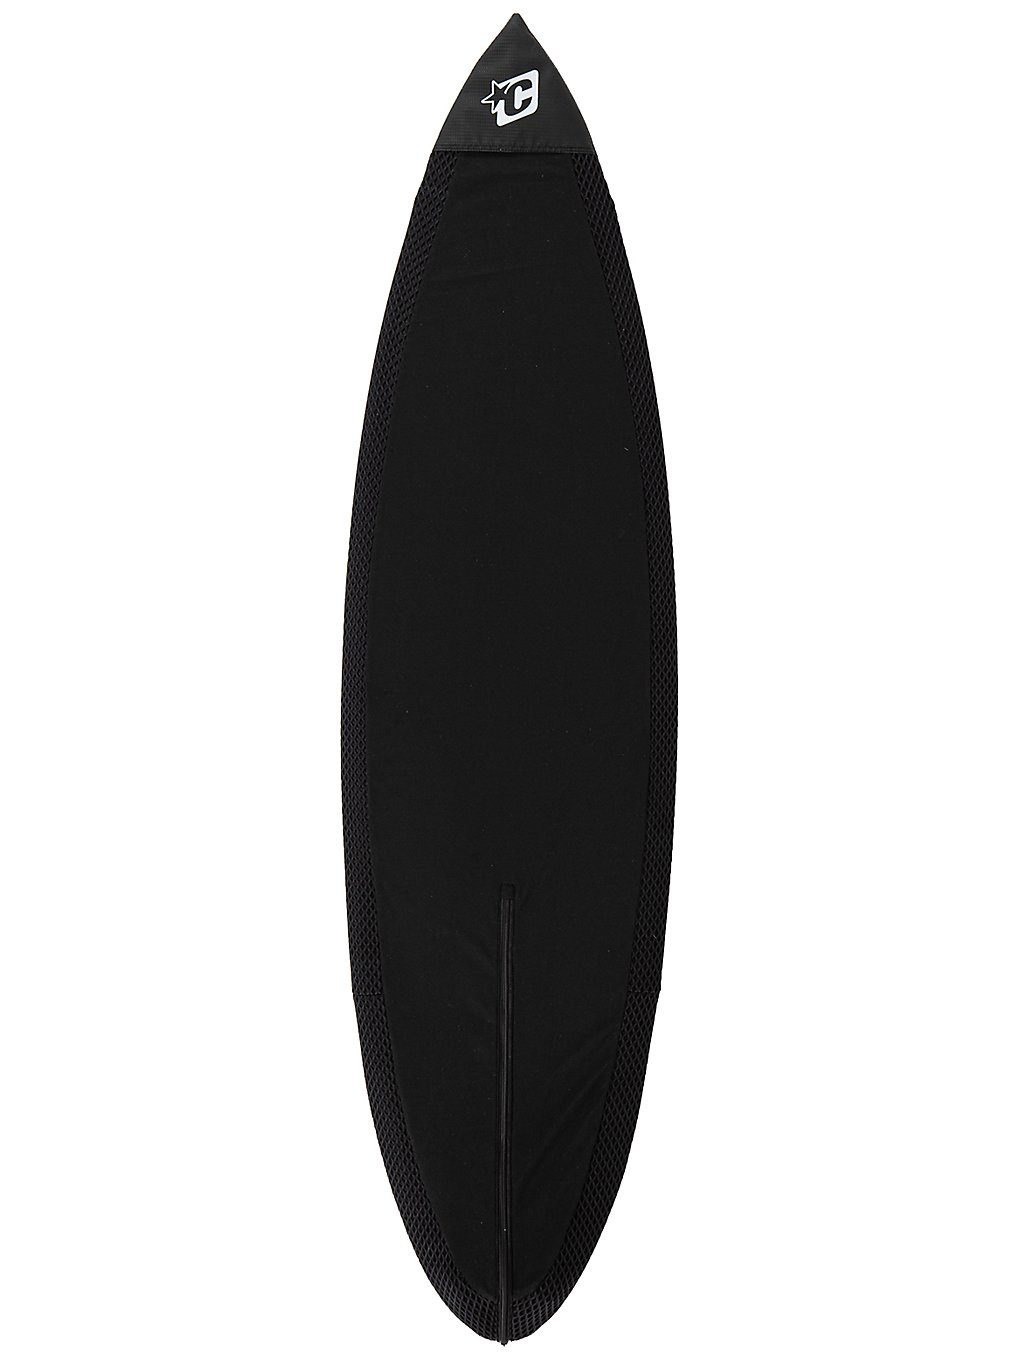 Image of Creatures of Leisure Shortboard Aero Light Sox 5'8 Sacca da Surf nero